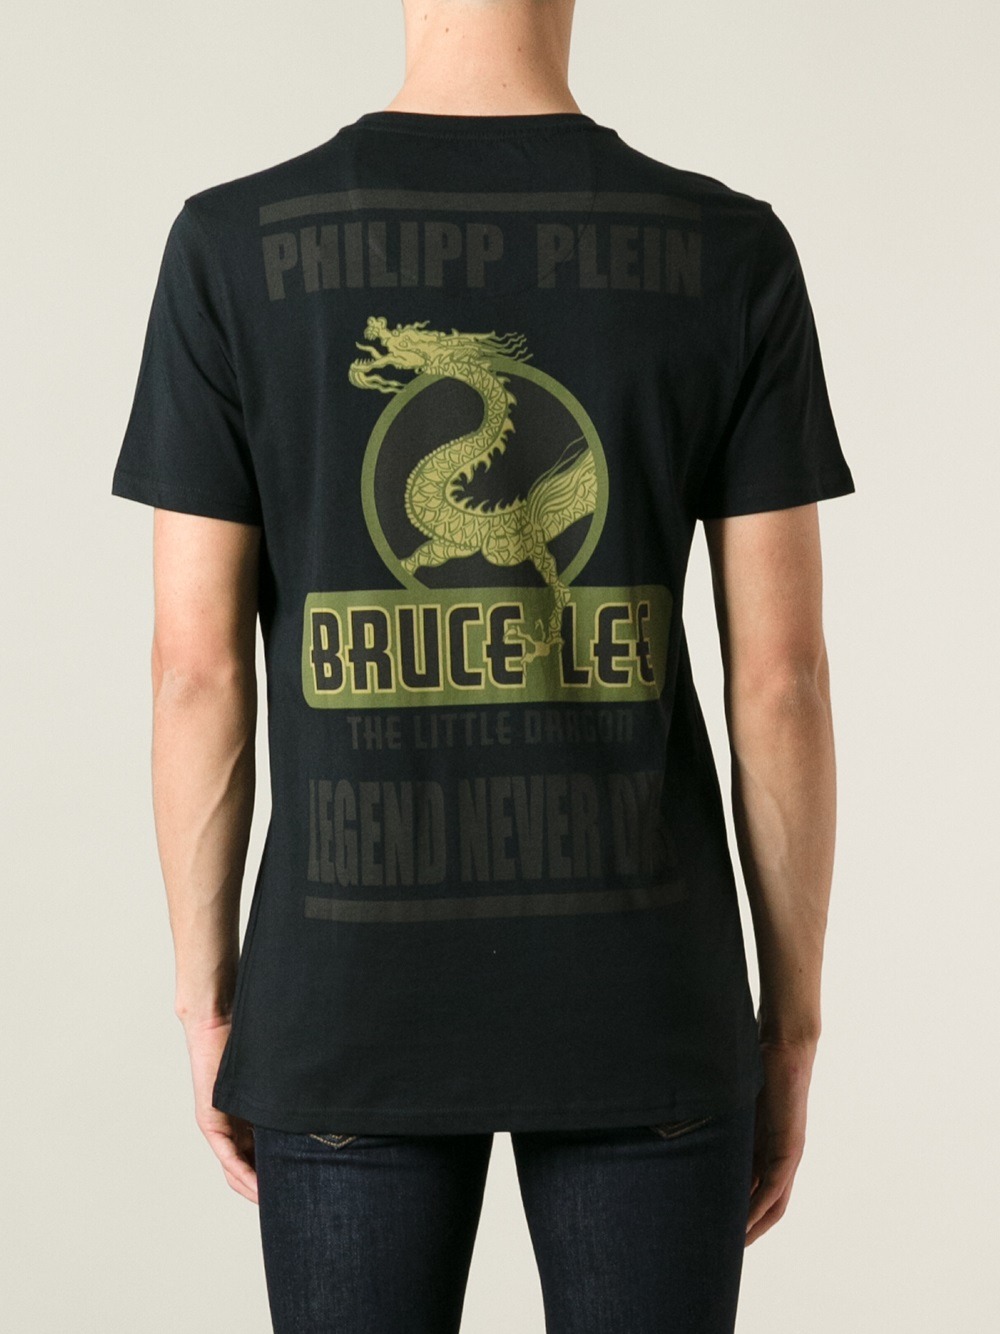 Philipp Plein Bruce Lee Tshirt in Black 